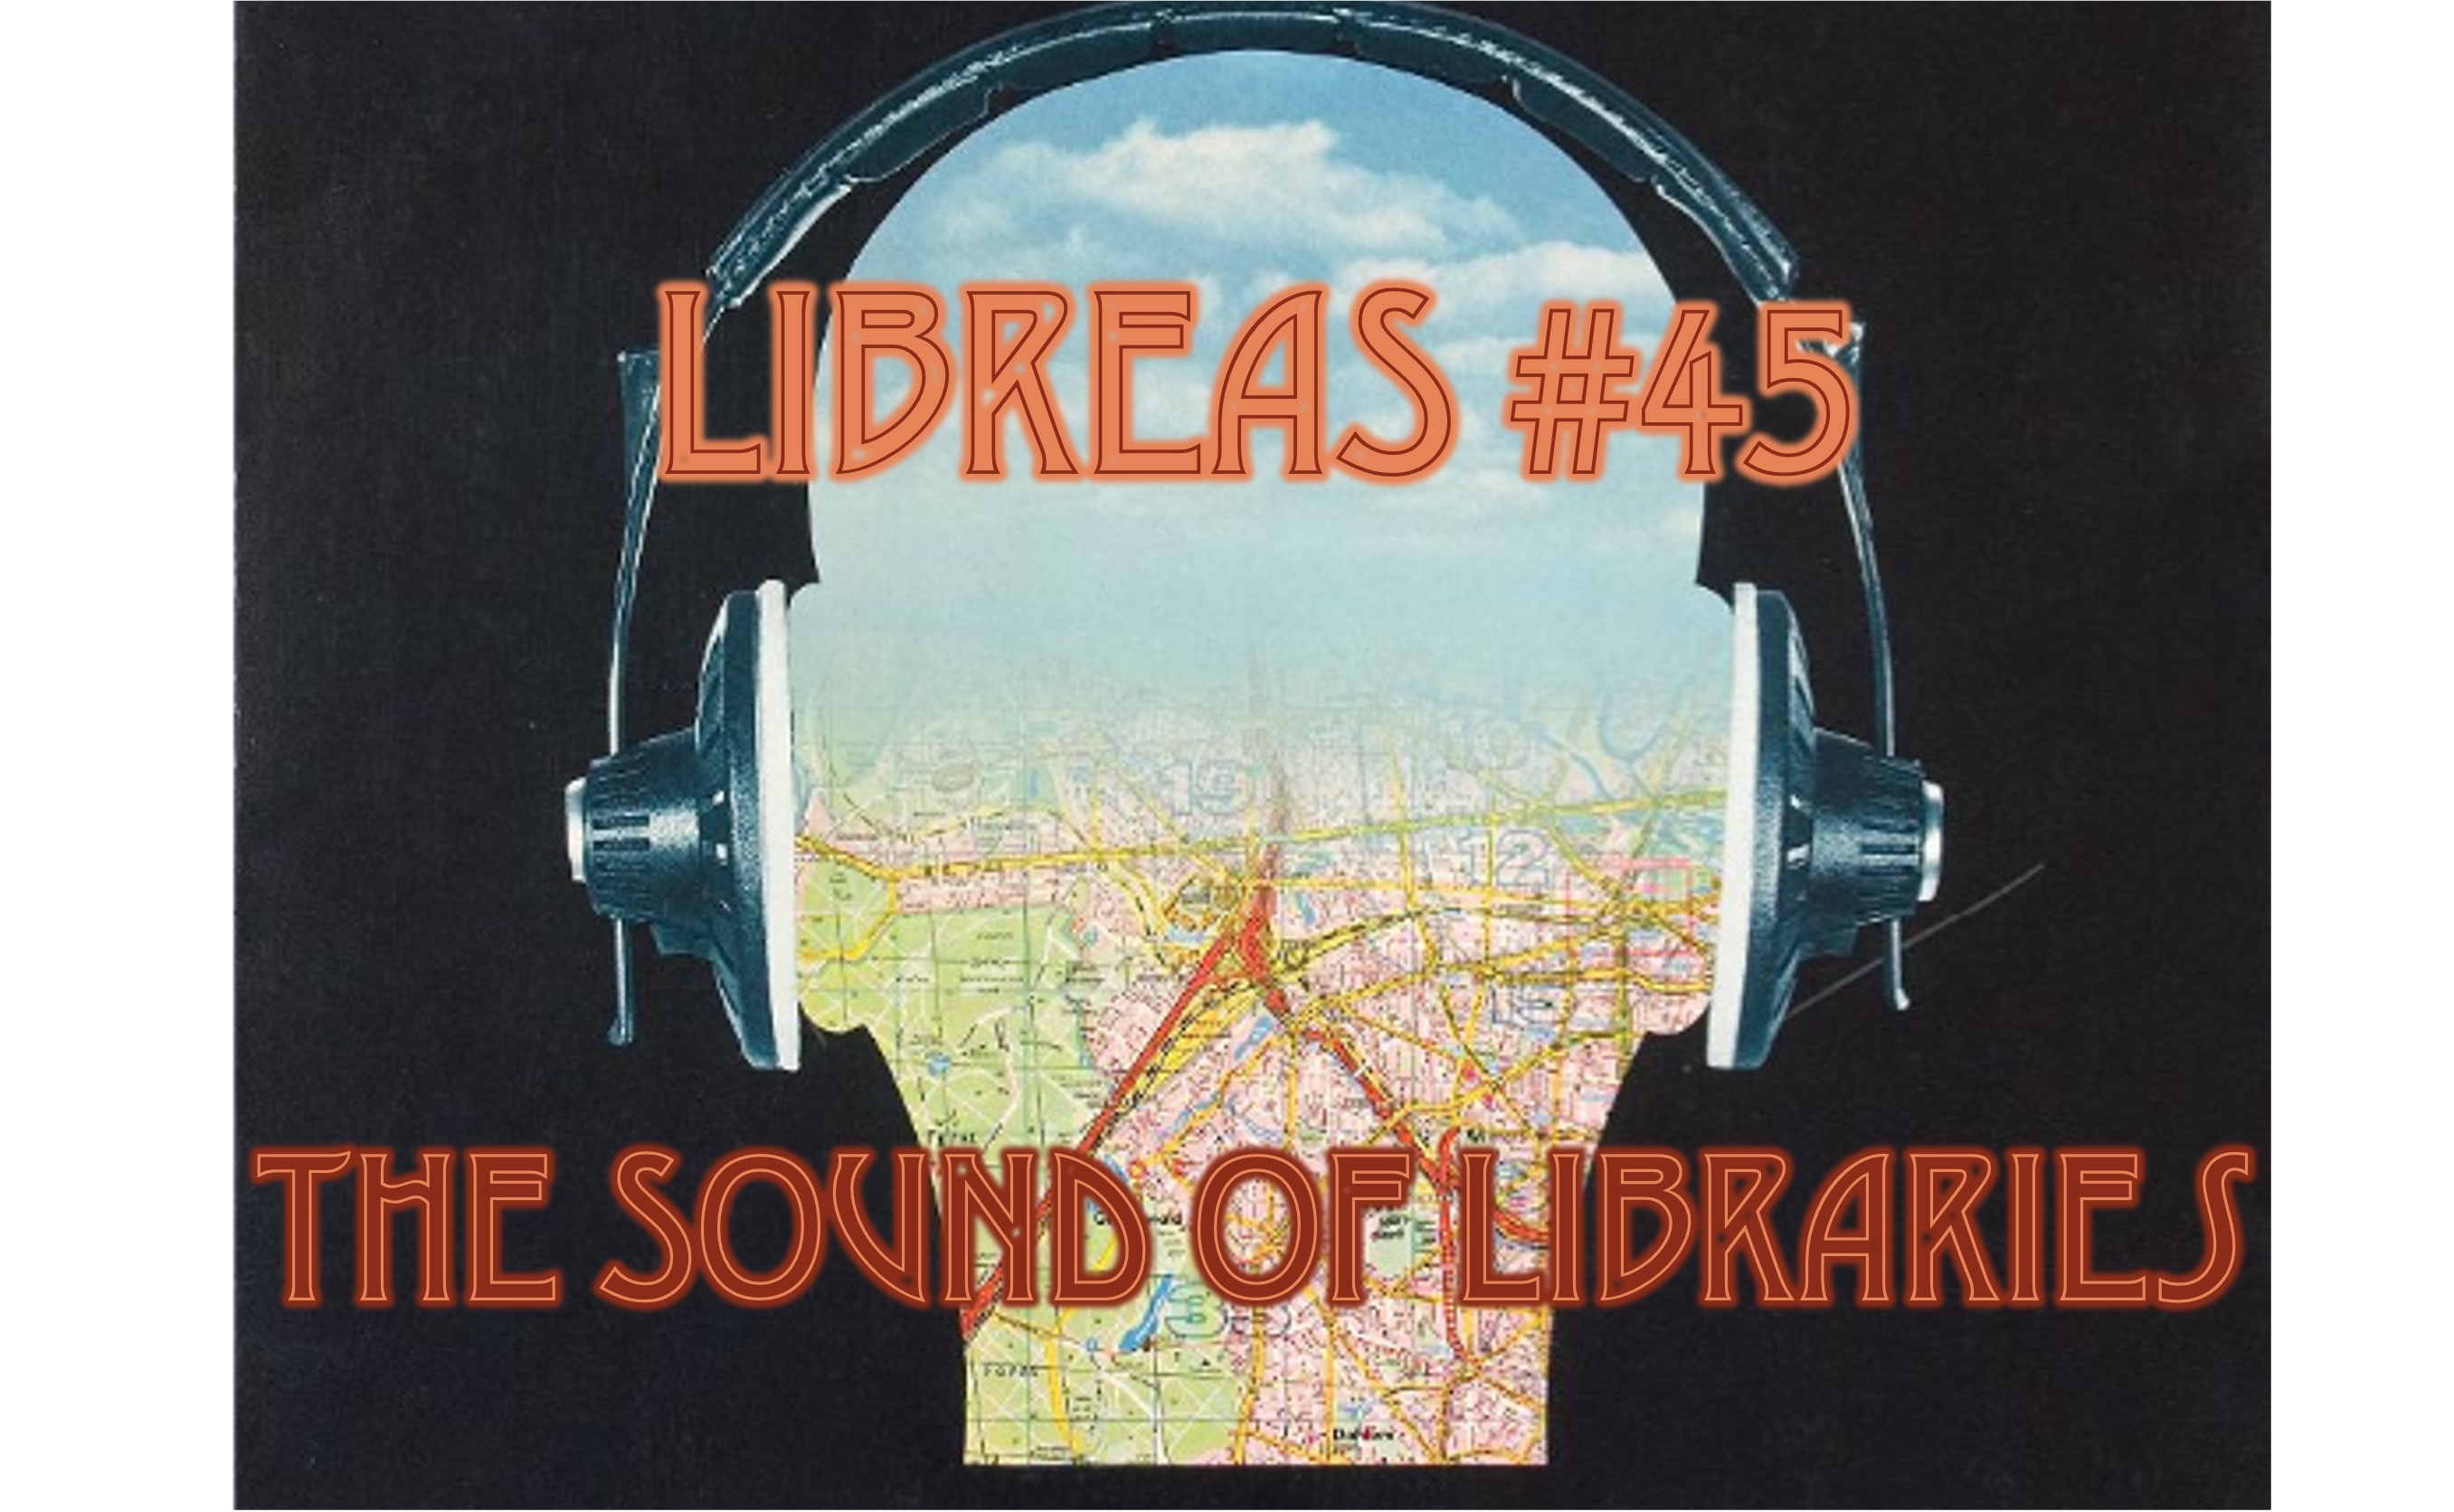 LIBREAS. Library Ideas #45